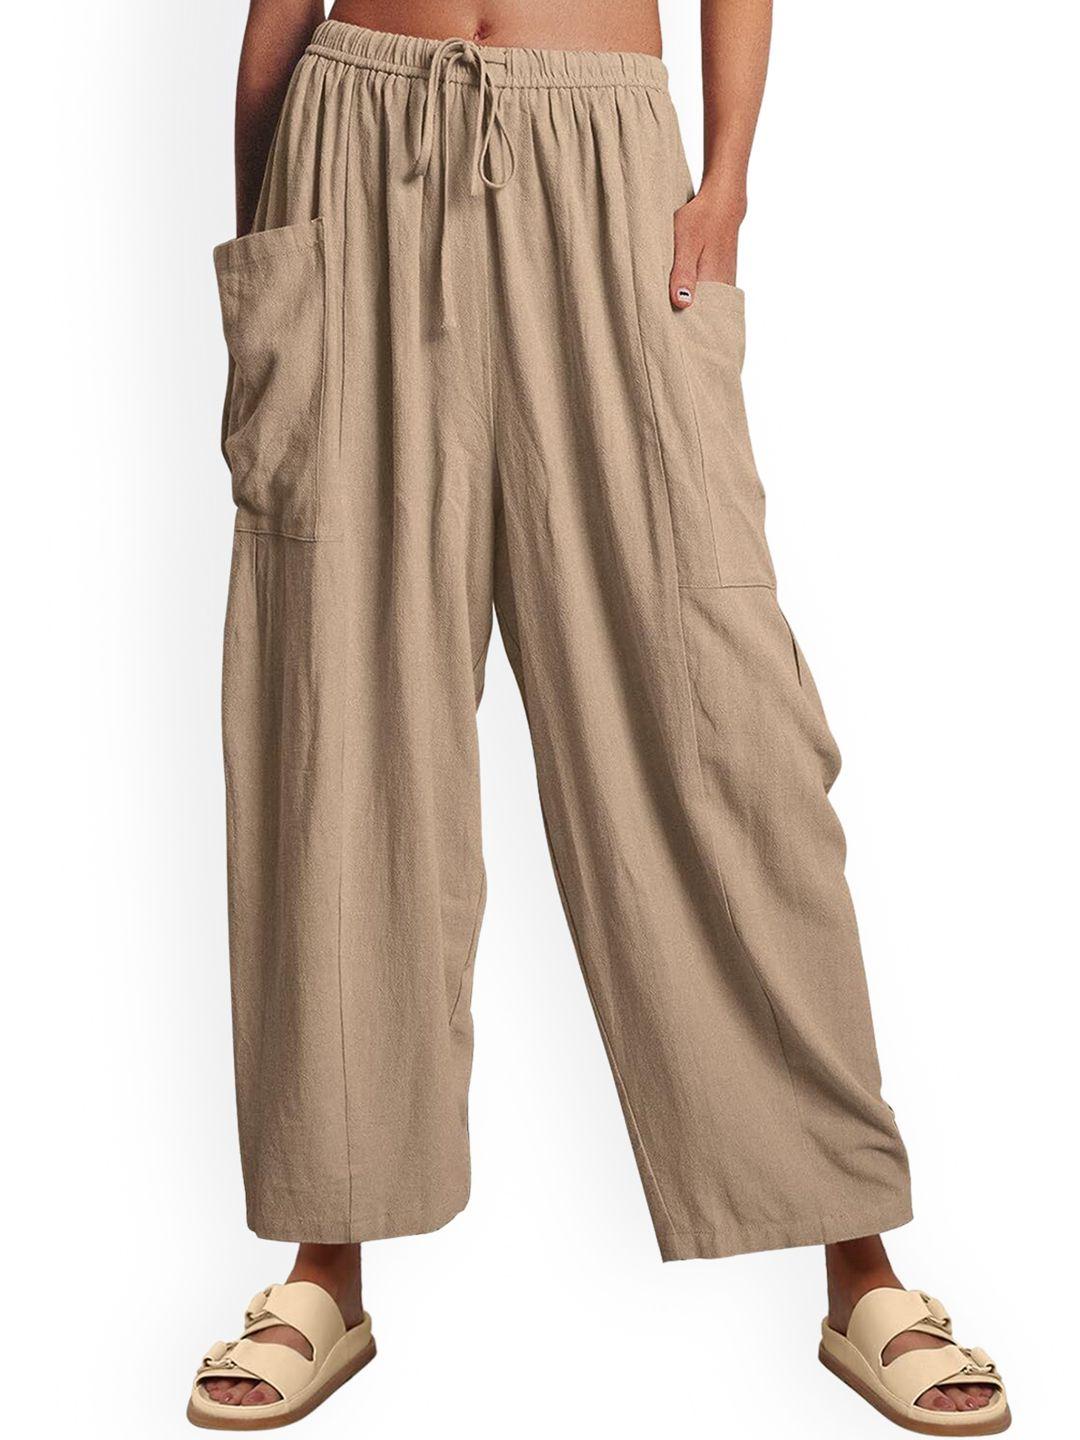 stylecast x kpop women khaki original trousers